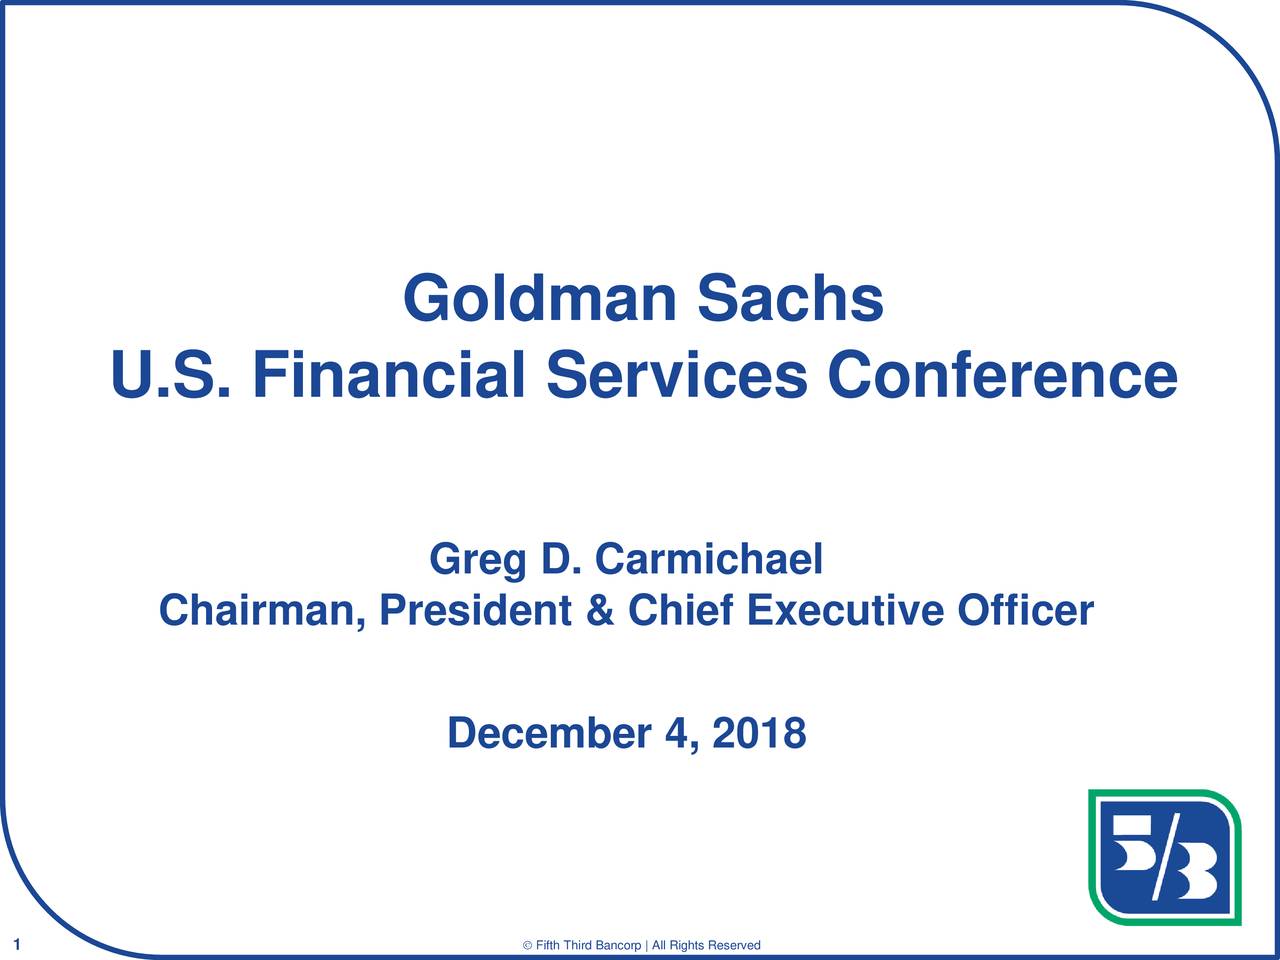 Fifth Third Bancorp (FITB) Presents At Goldman Sachs U.S. Financial